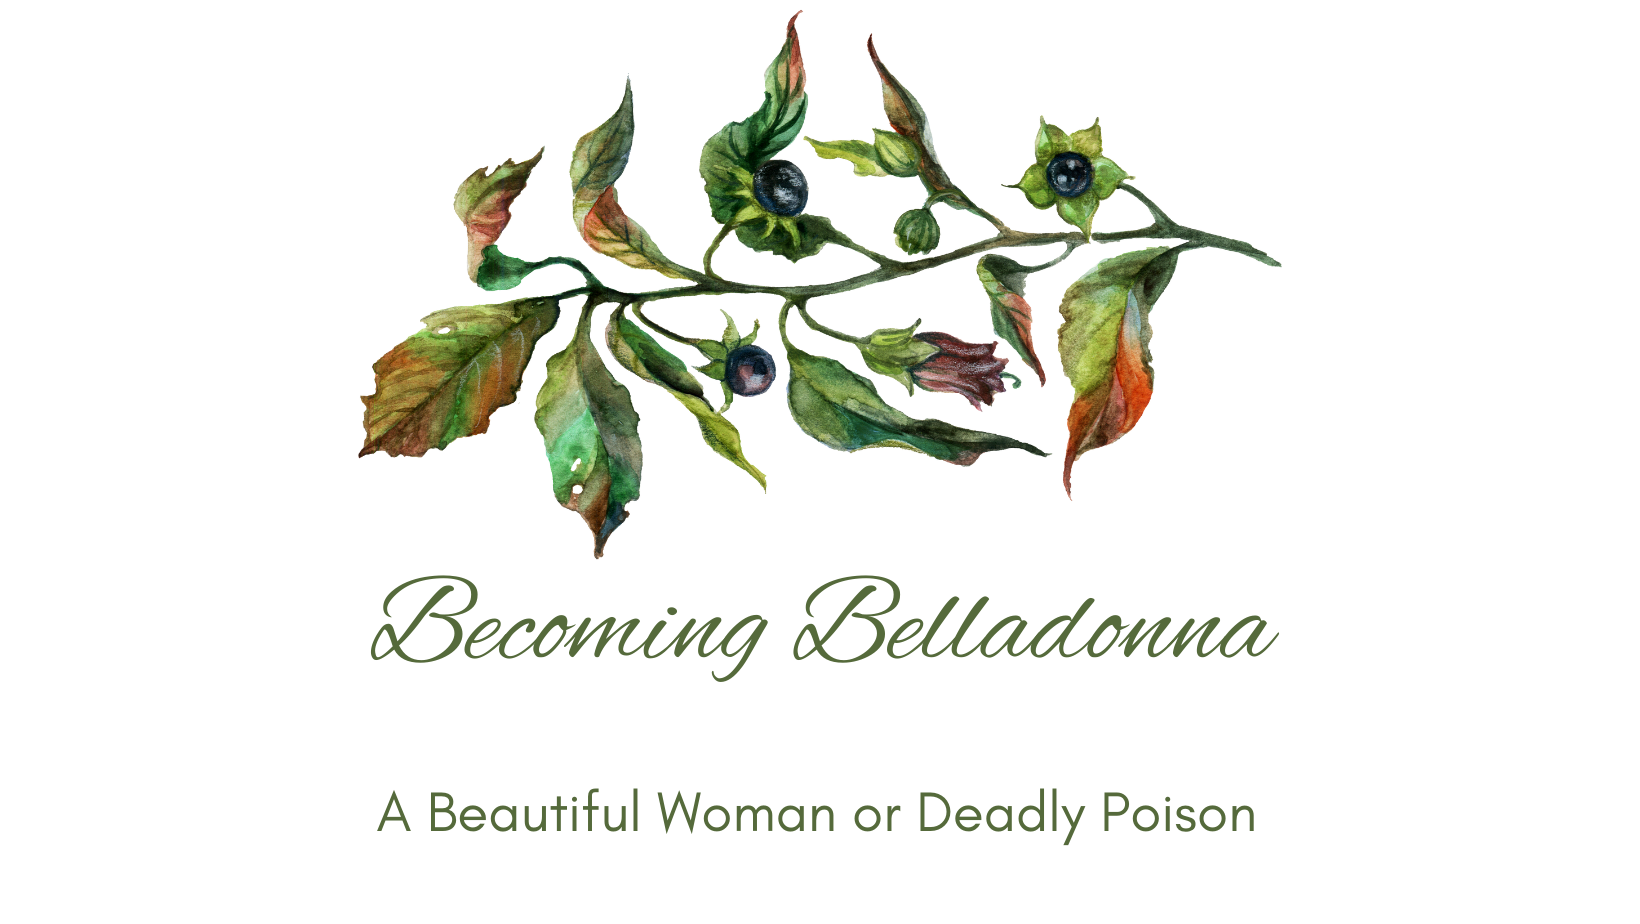 Becoming Belladonna